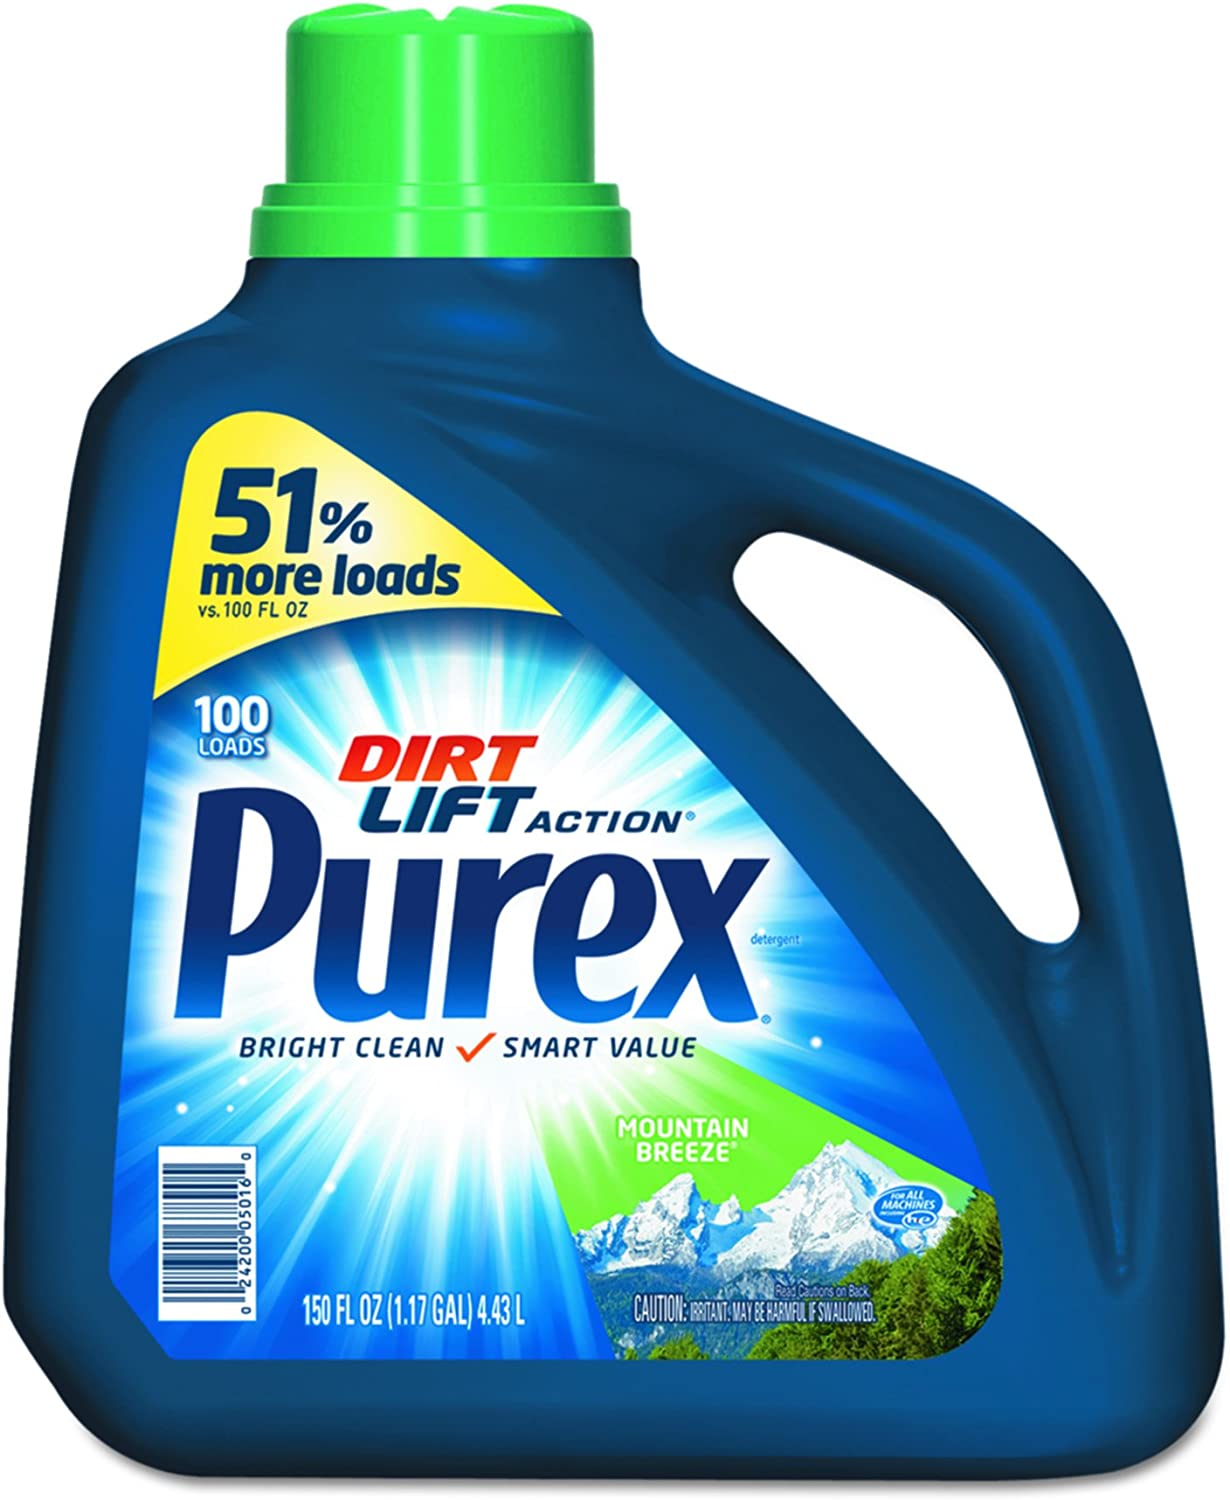 Purex Dirt Lift Action Concentrated Detergent